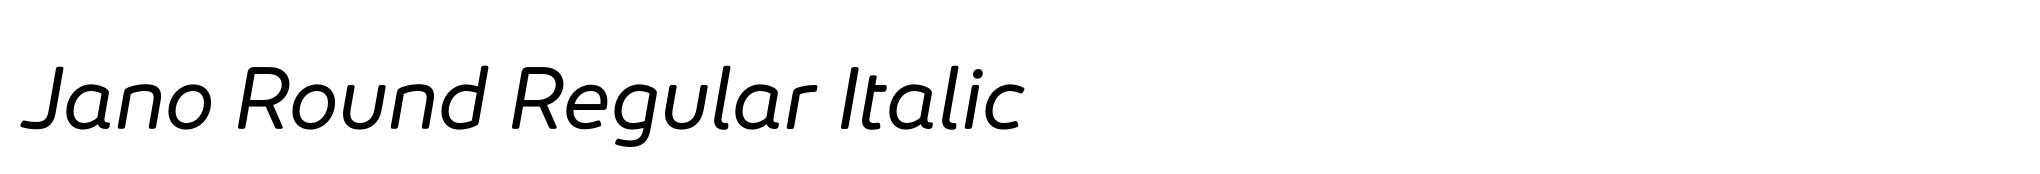 Jano Round Regular Italic image